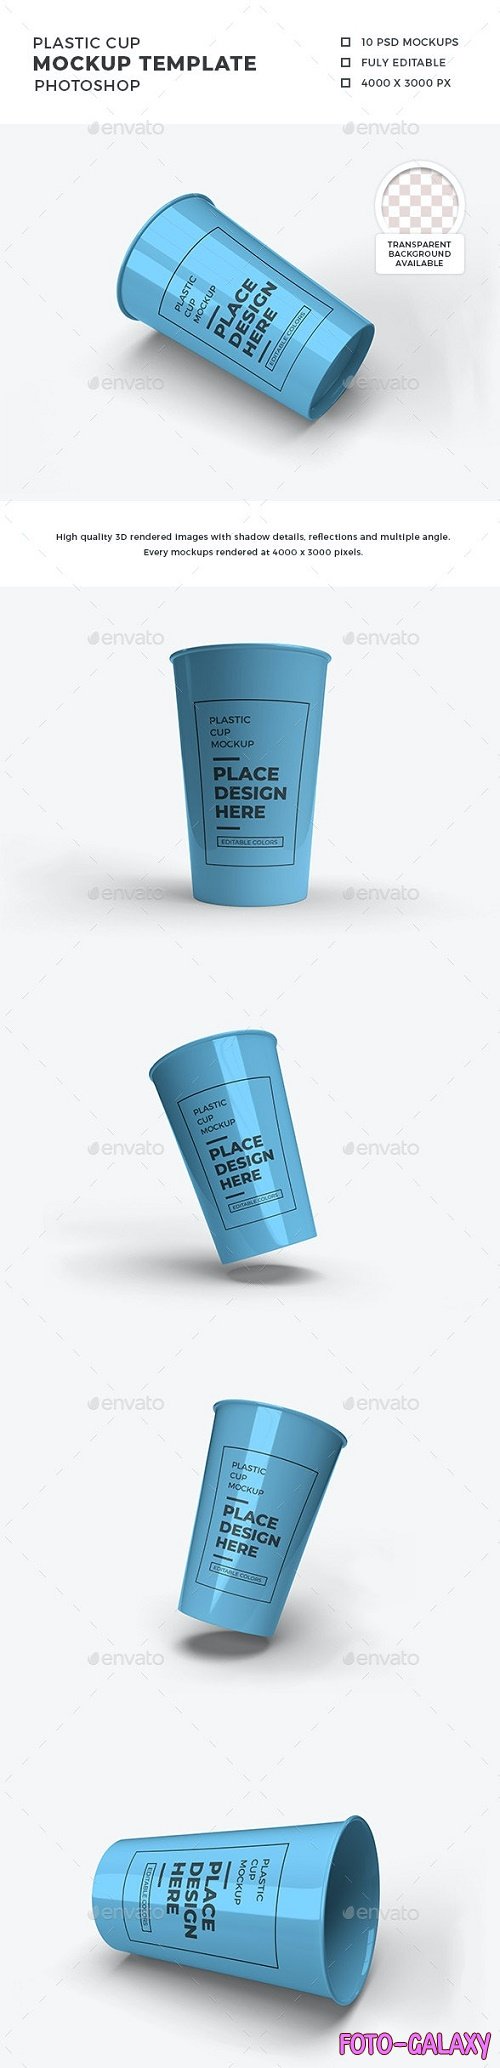 GraphicRiver - Plastic Cup Mockup Template Set 29926882